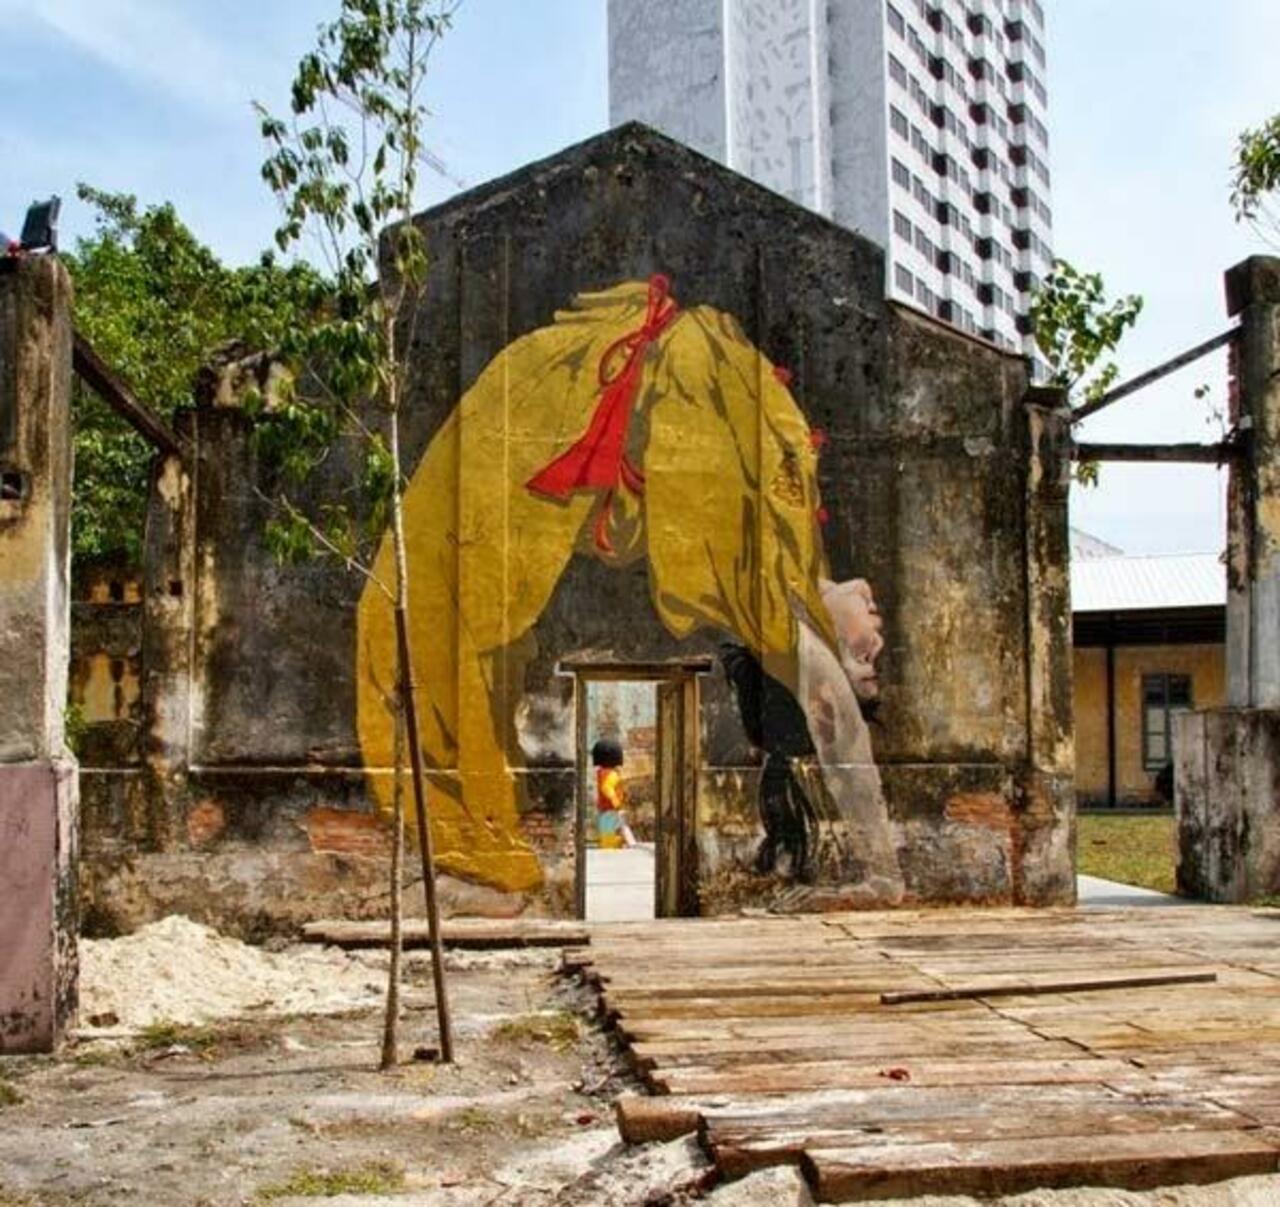 still bending over backwards“@Pitchuskita: Ernest Zacharevic
Penang, Malaysia 

#streetart #art #graffiti #mural http://t.co/zp2SHkrDbk”